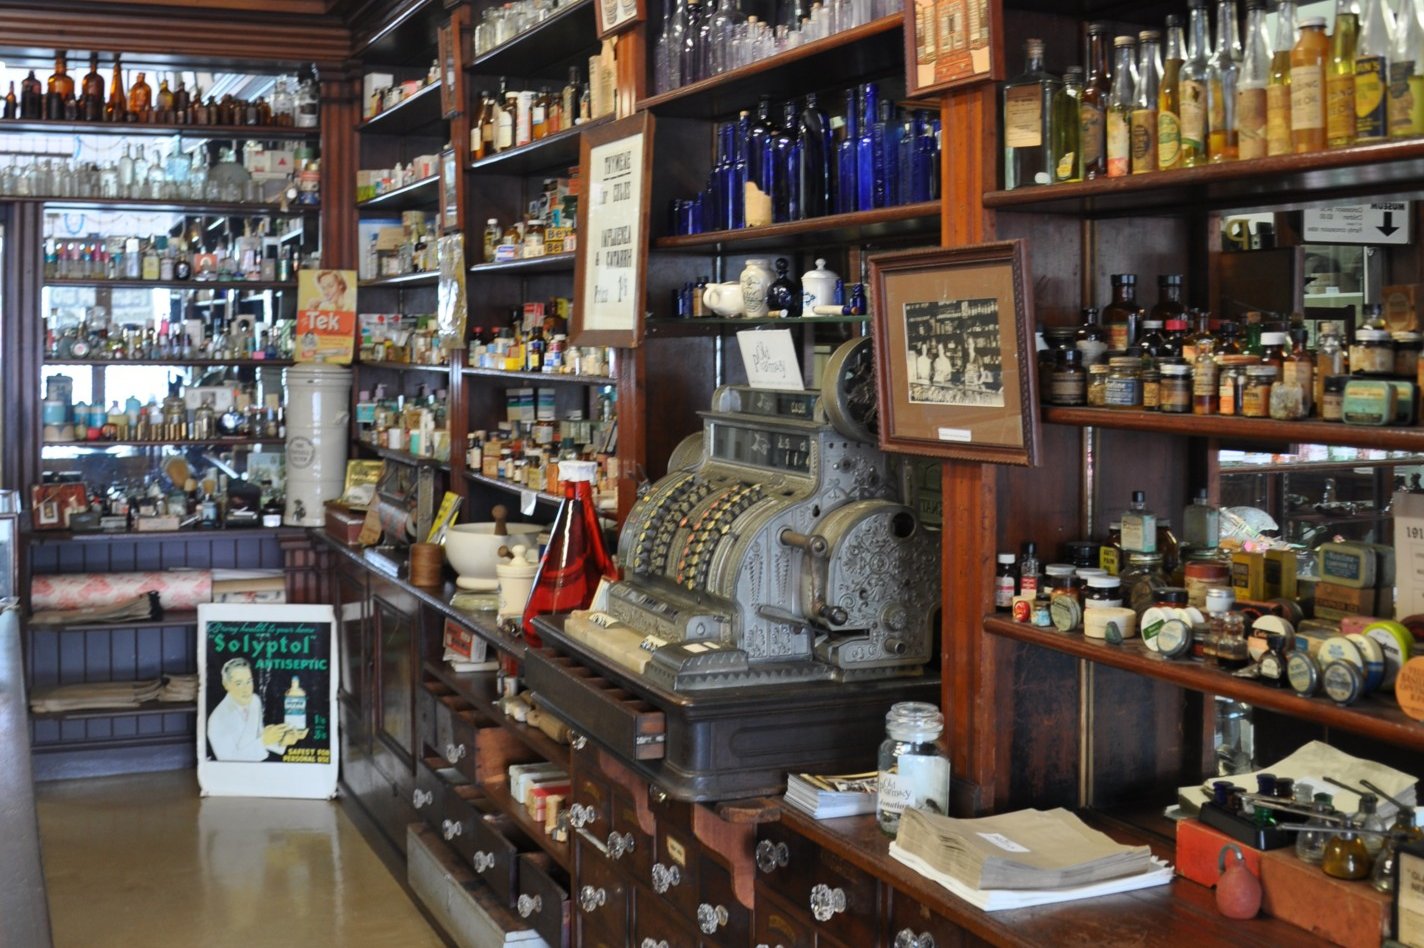 Old Pharmacy Museum displays